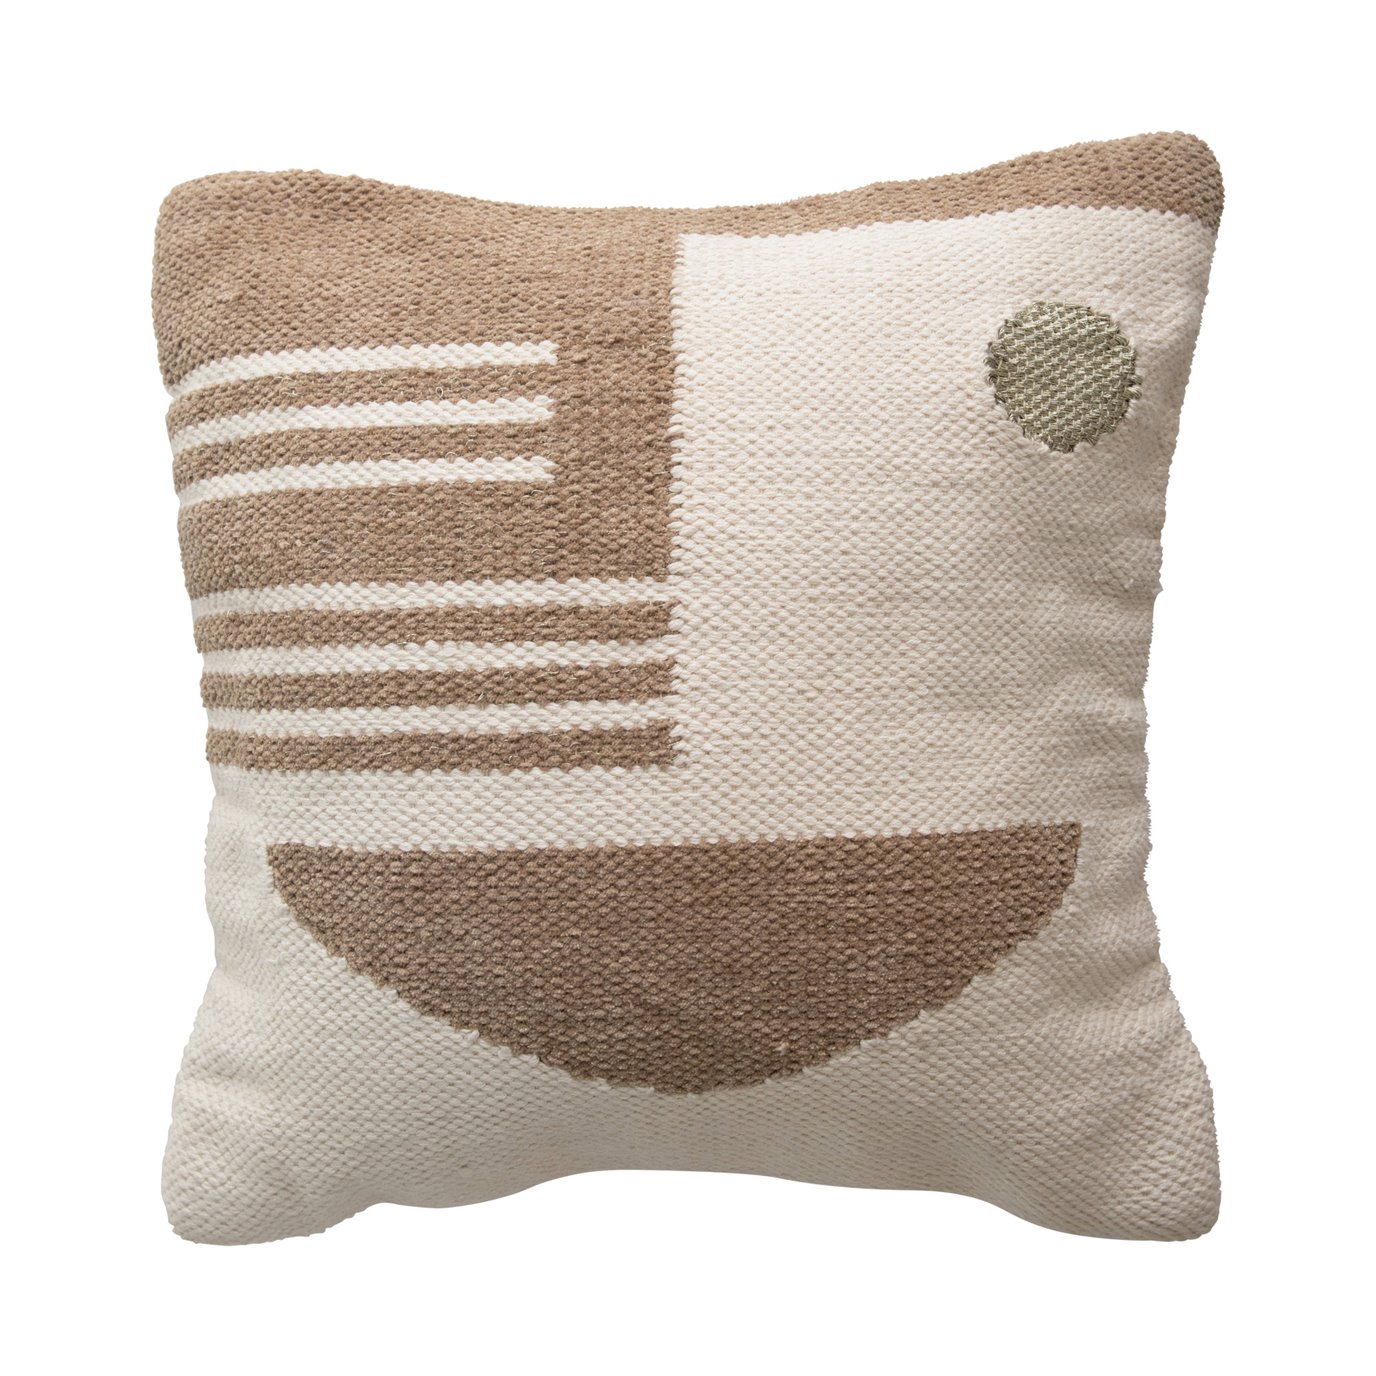 Square Cream & Tan w/ Gold Geometric Pattern Woven Cotton & Wool Pillow